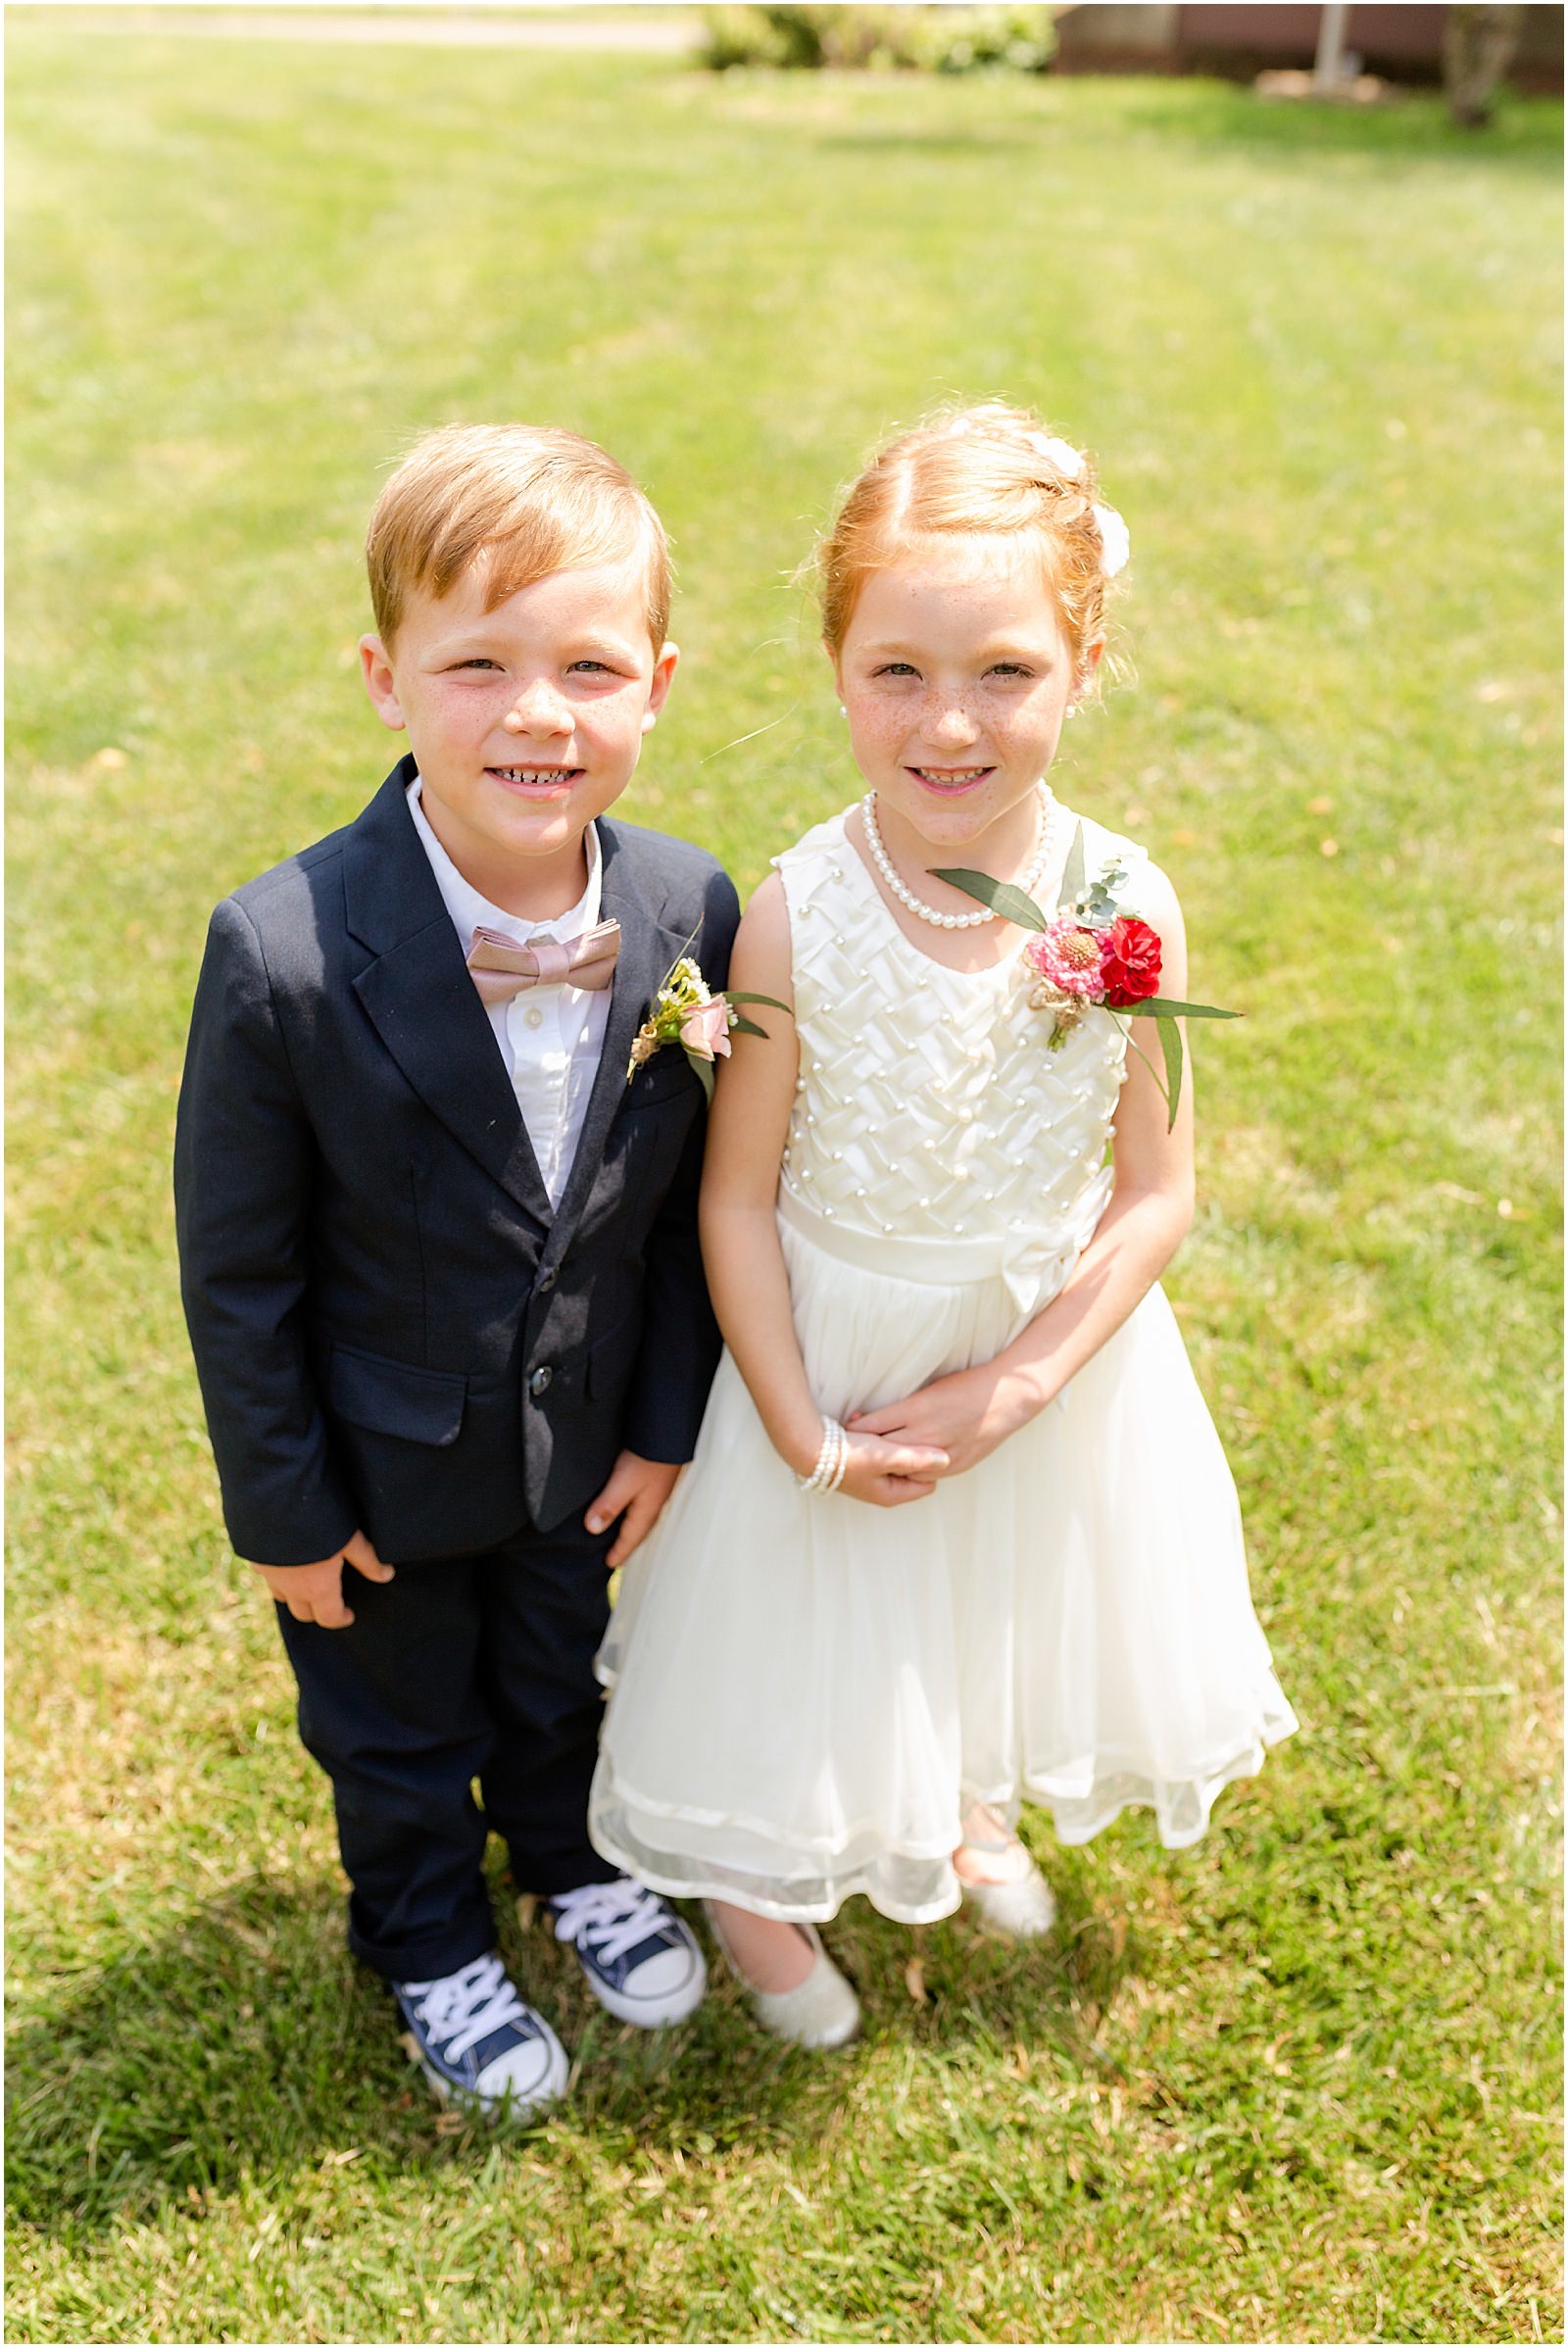 Deidra and Andrew | A Huntingburgh Indiana Wedding Bret and Brandie | Evansville Photographers | @bretandbrandie-0077.jpg